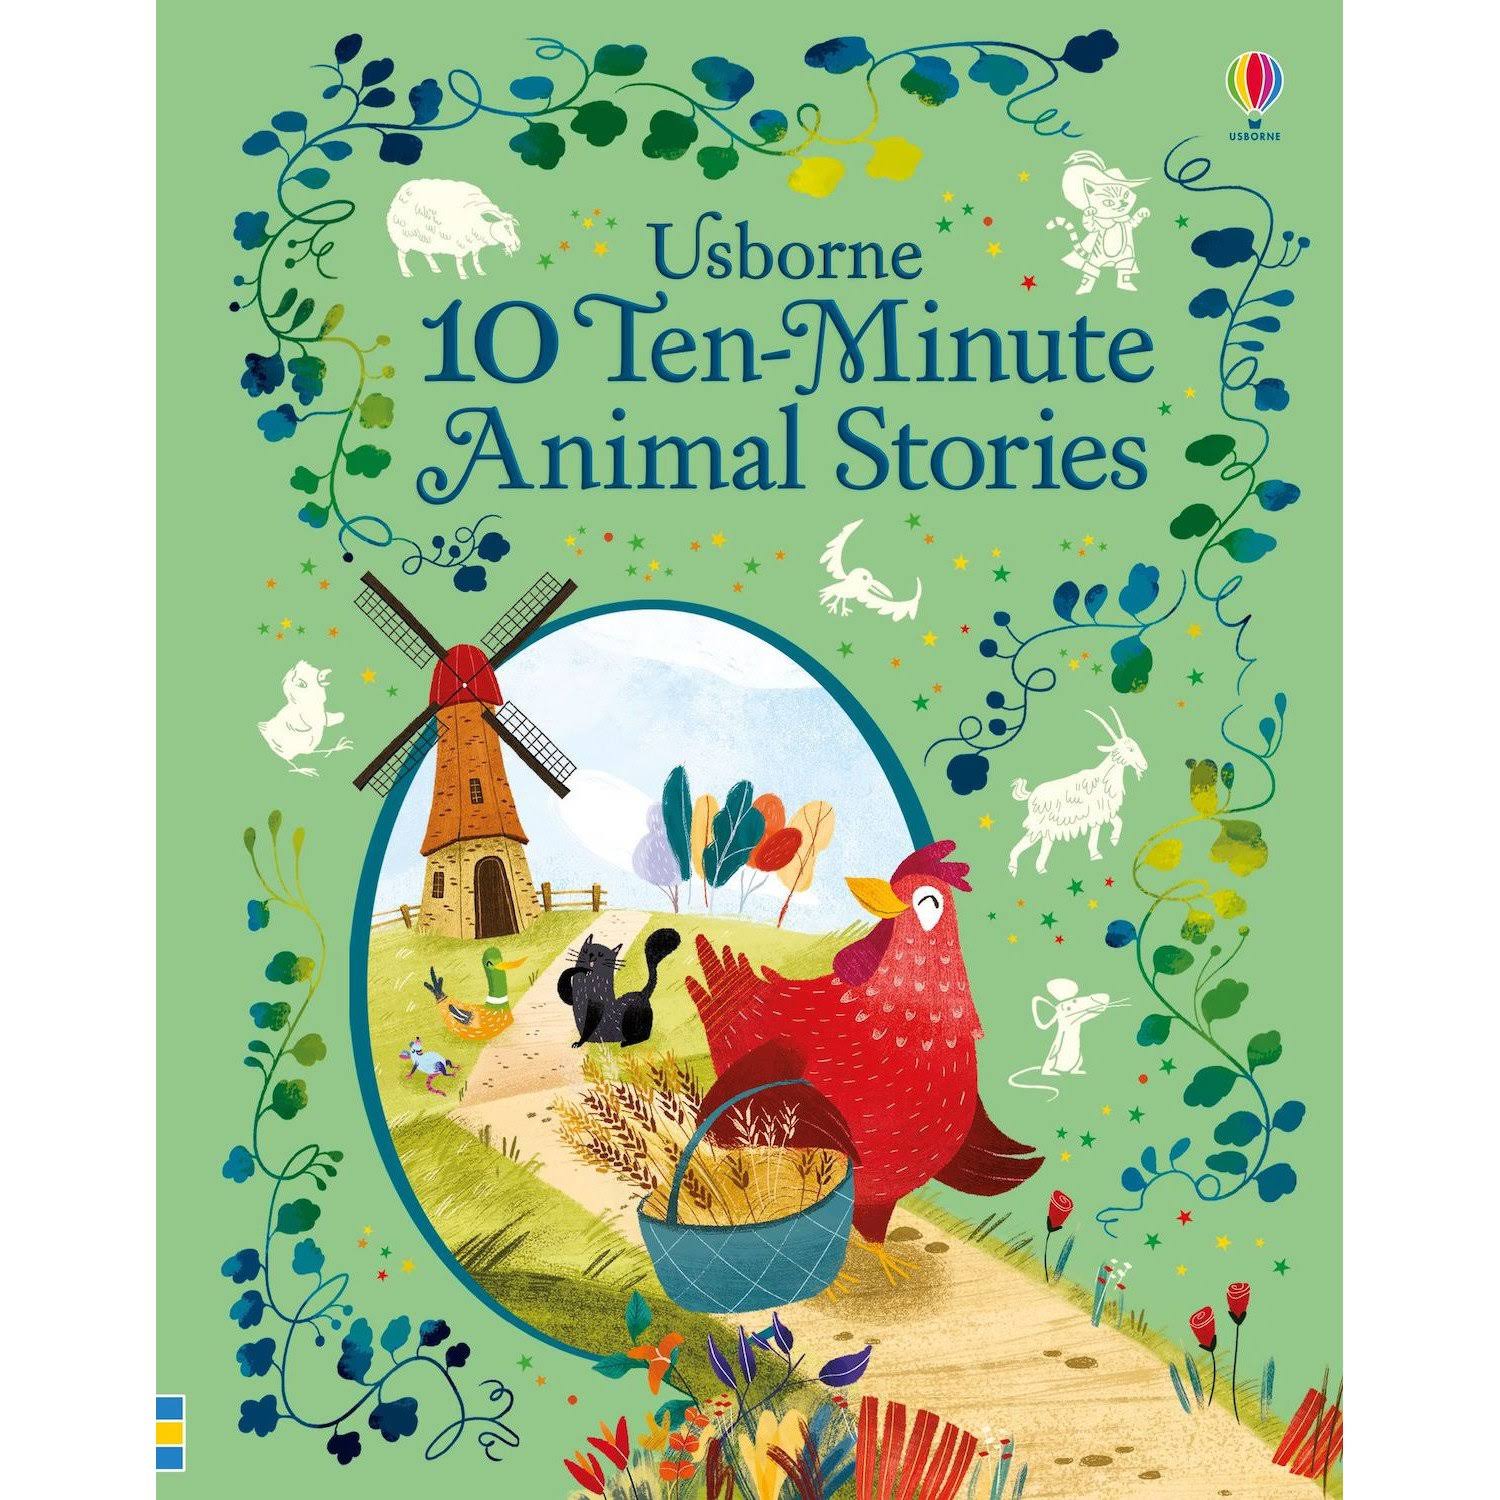 10 Ten-minute Animal Stories [Book]